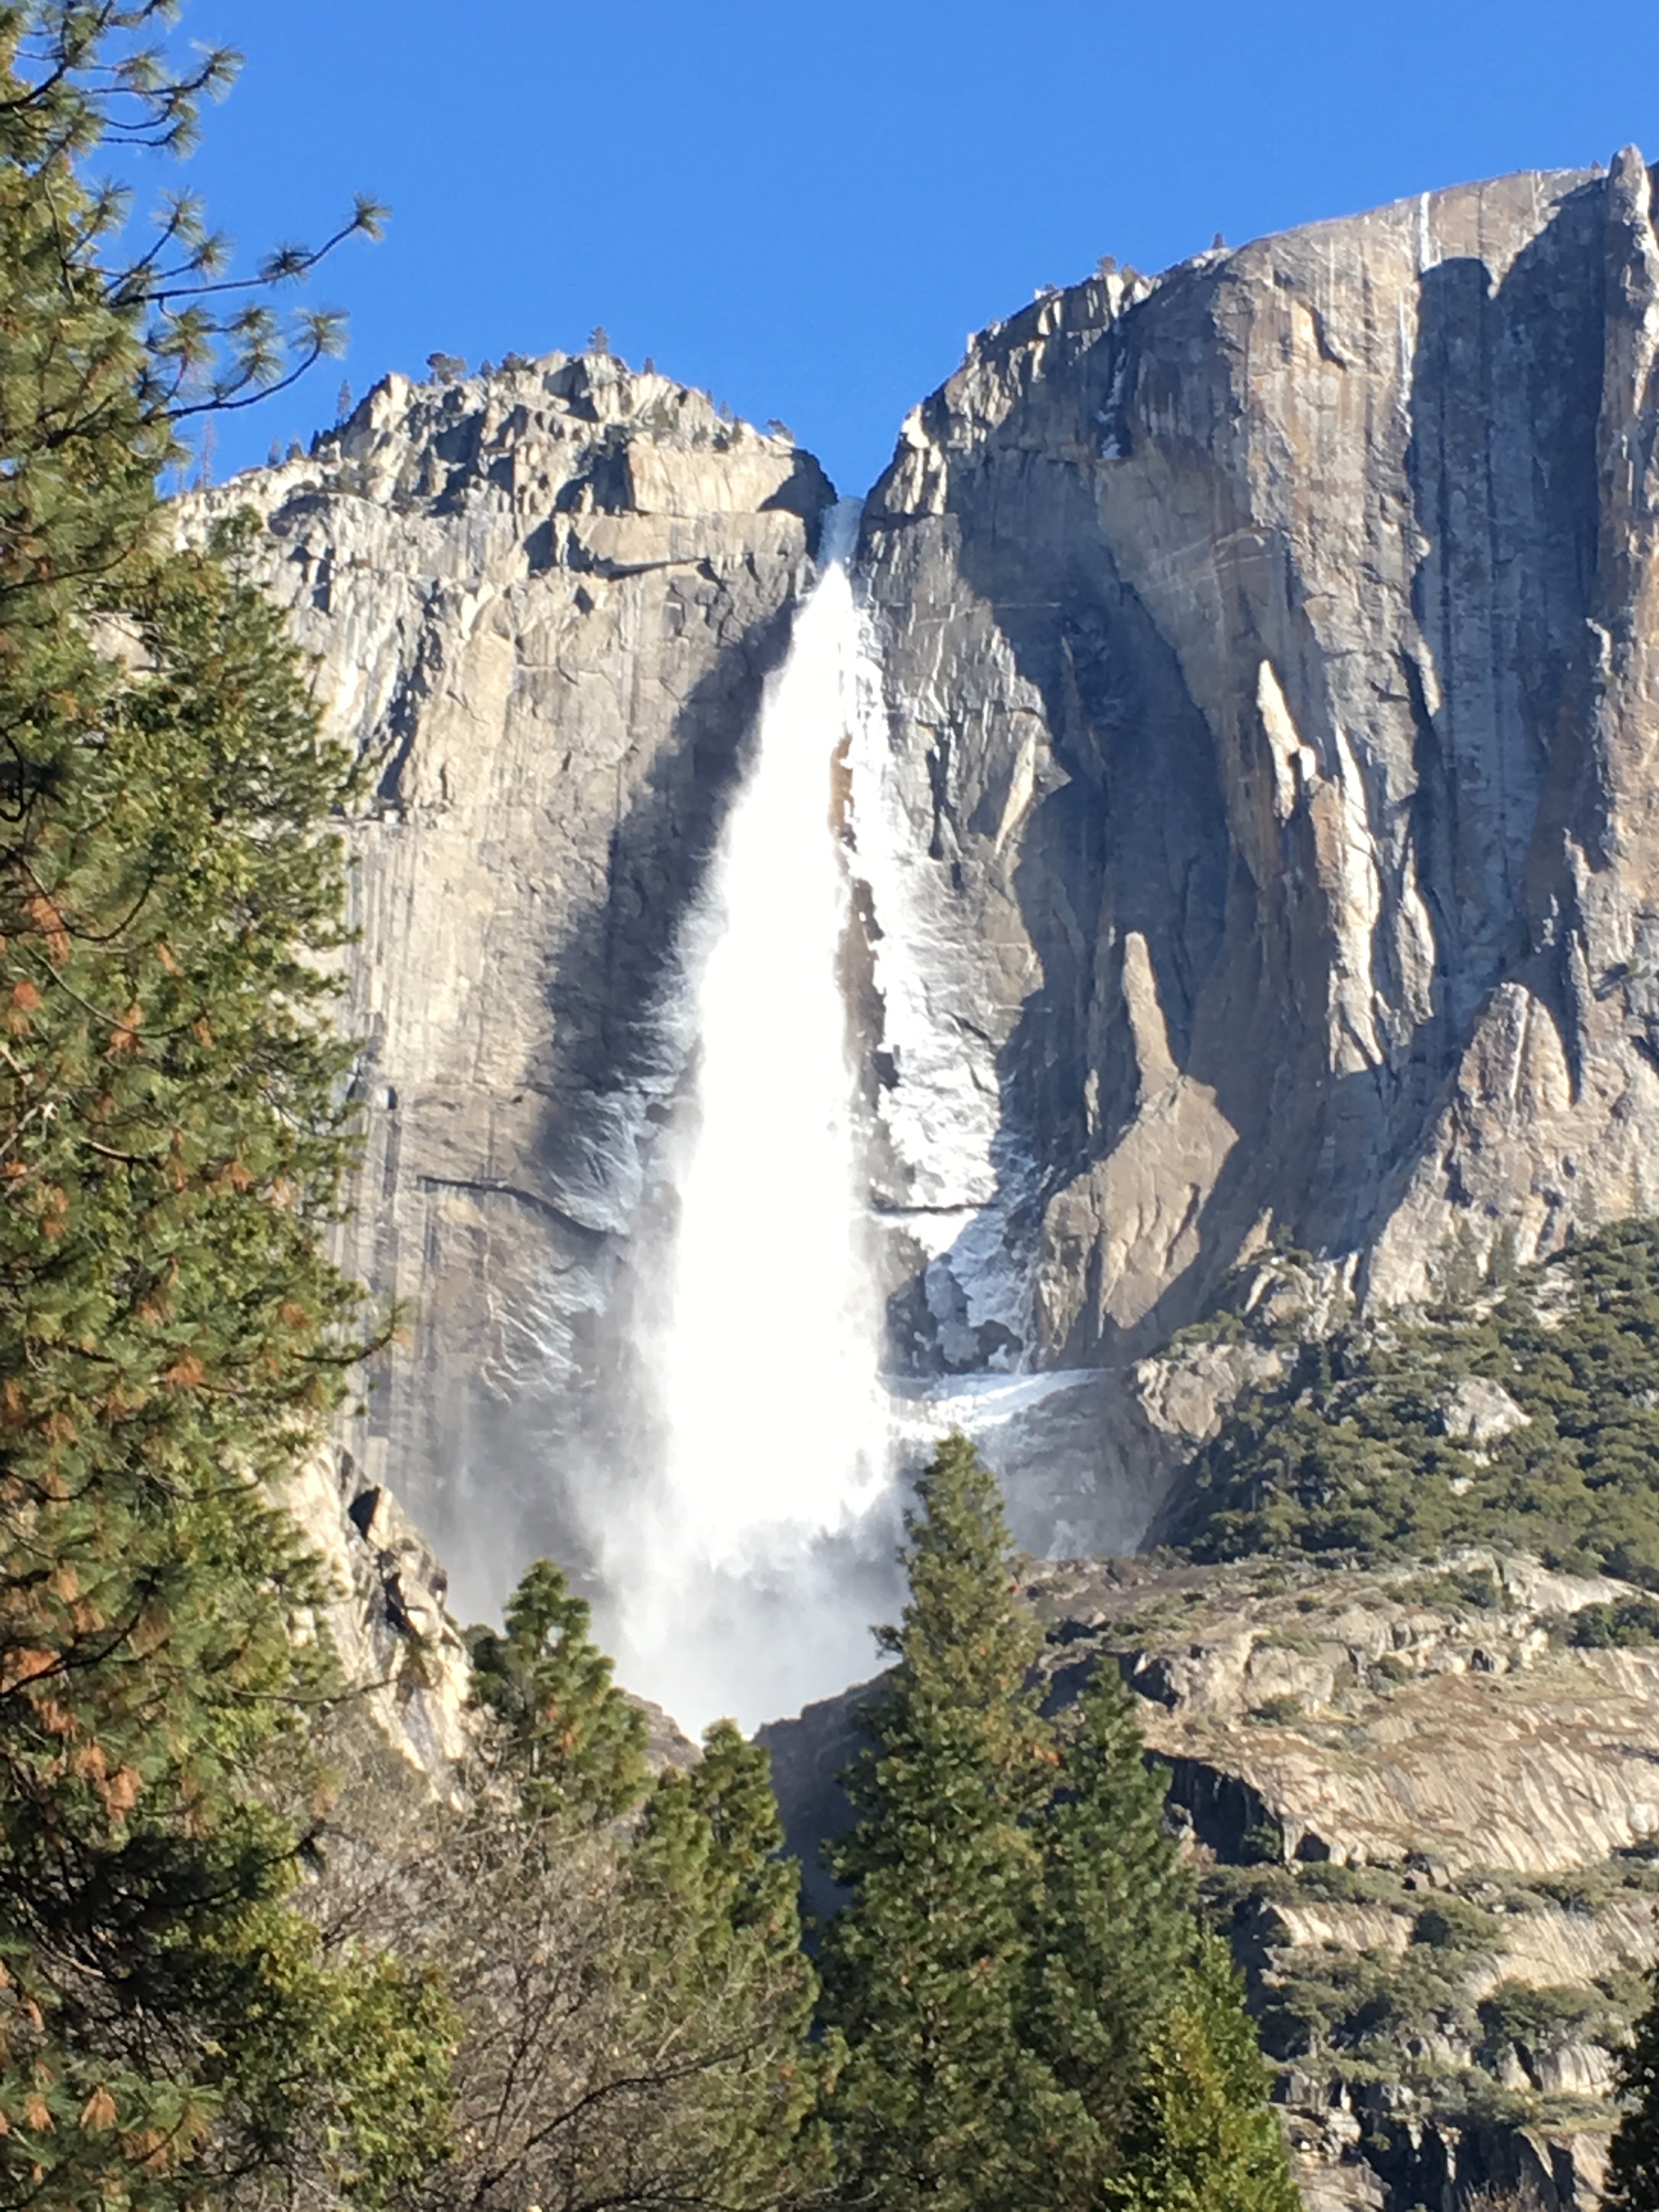 The Essential Yosemite